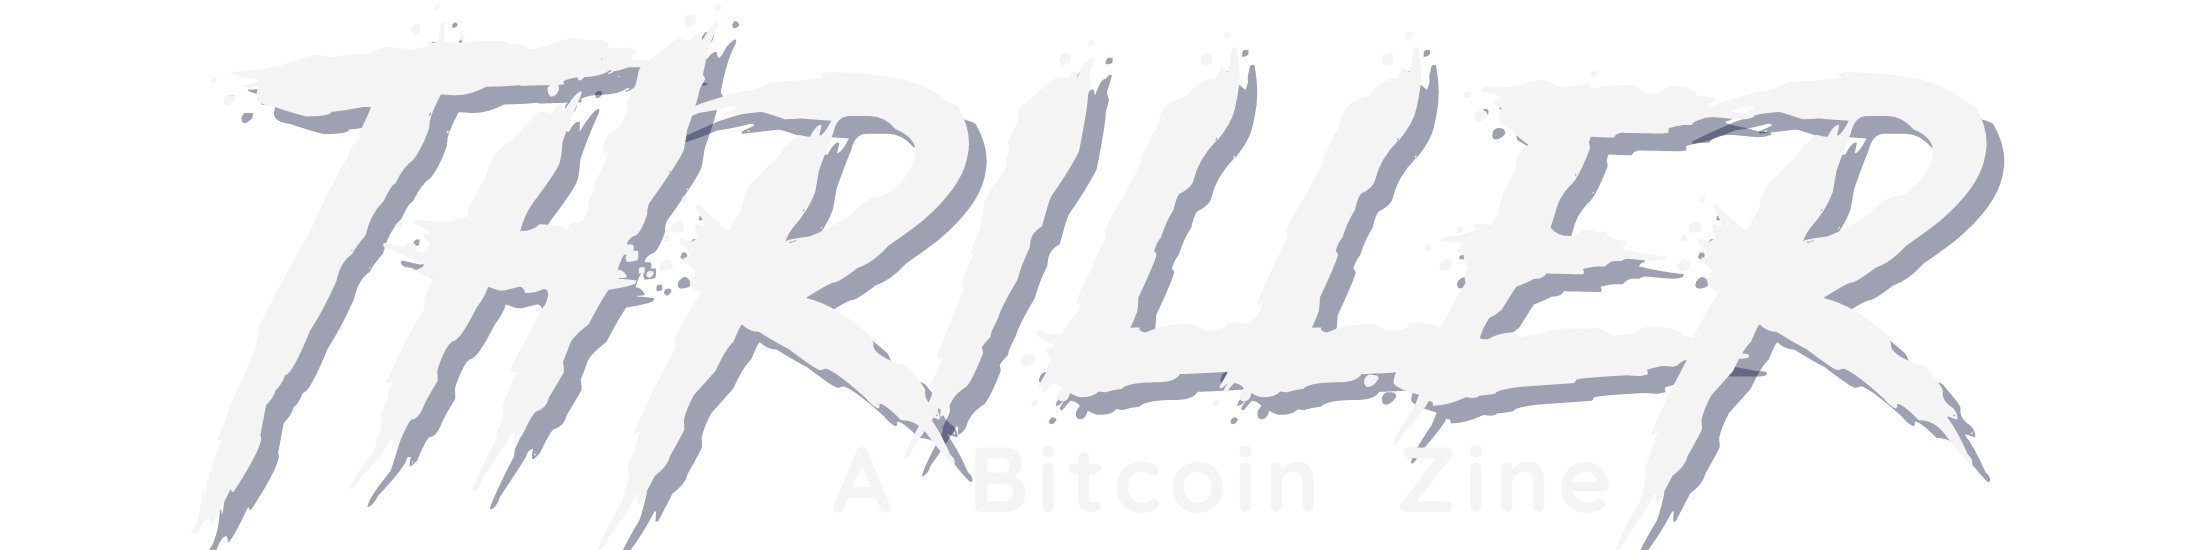 Thriller "A Bitcoin Zine"